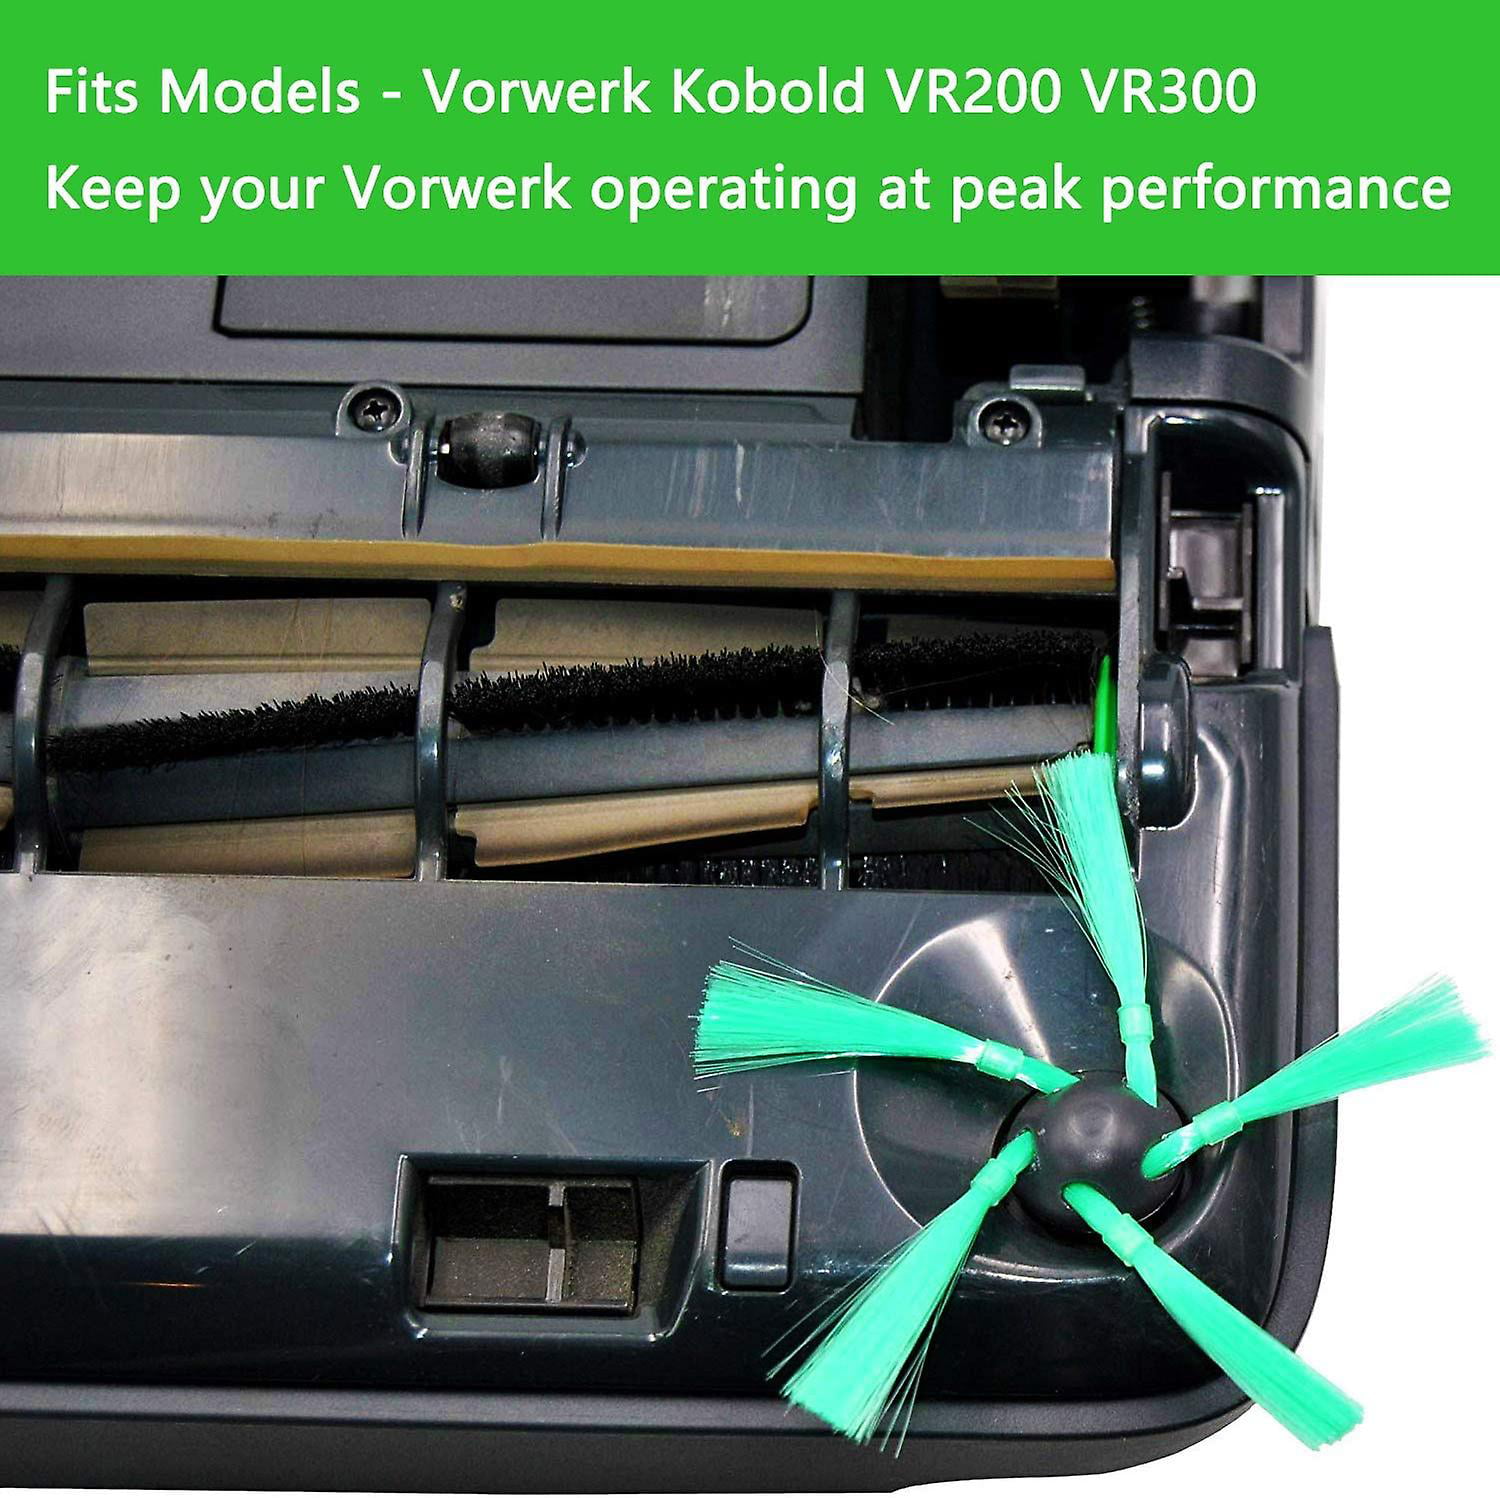 Filters Side Brushes Cleaning Tool Parts For Vorwerk Kobold VR200 Vacuum Cleaner